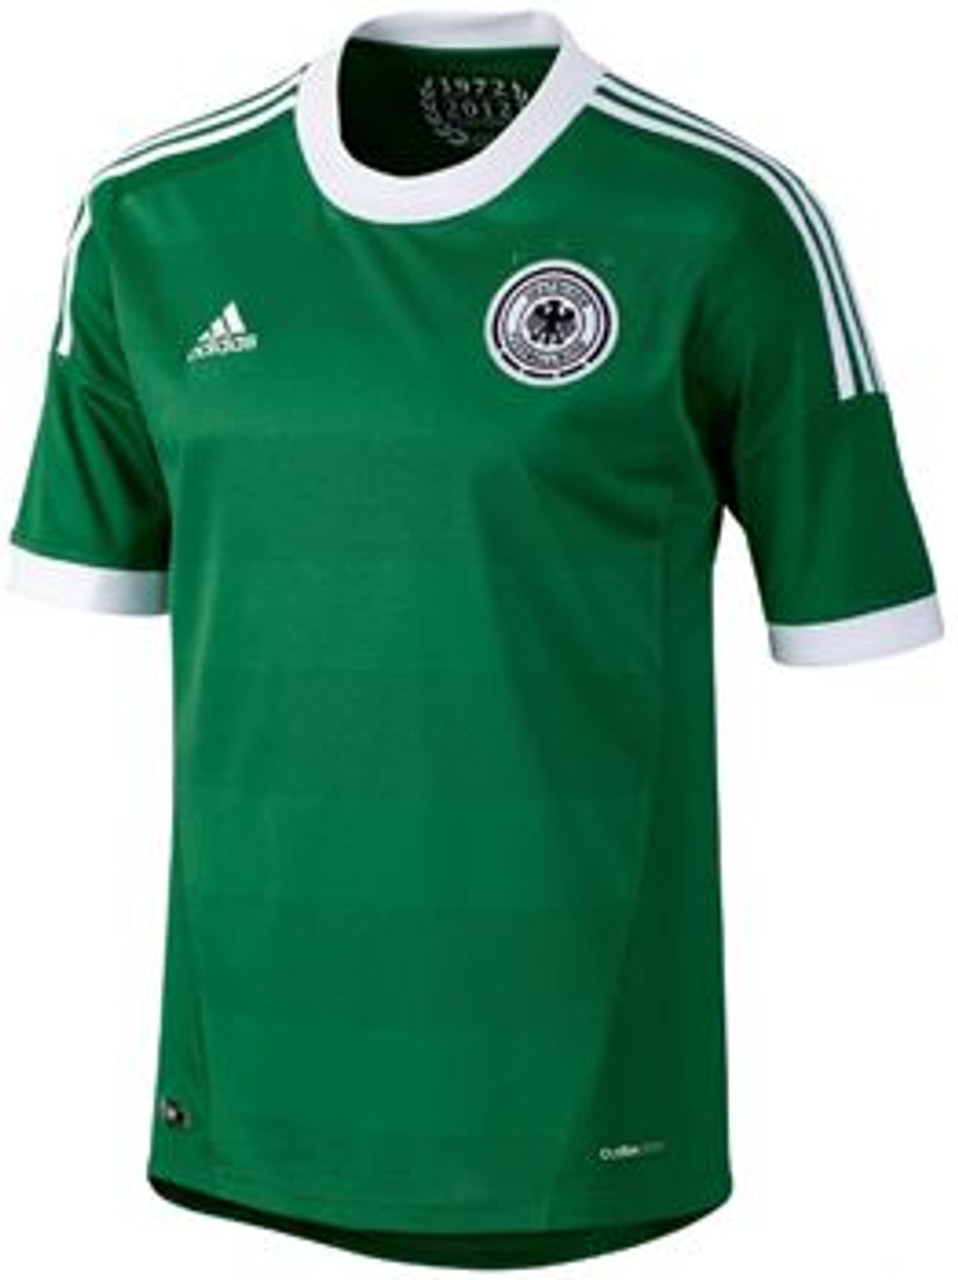 Adidas Spain 2012 Away Kit Soccer T-Shirt Jersey Men’s Size Small